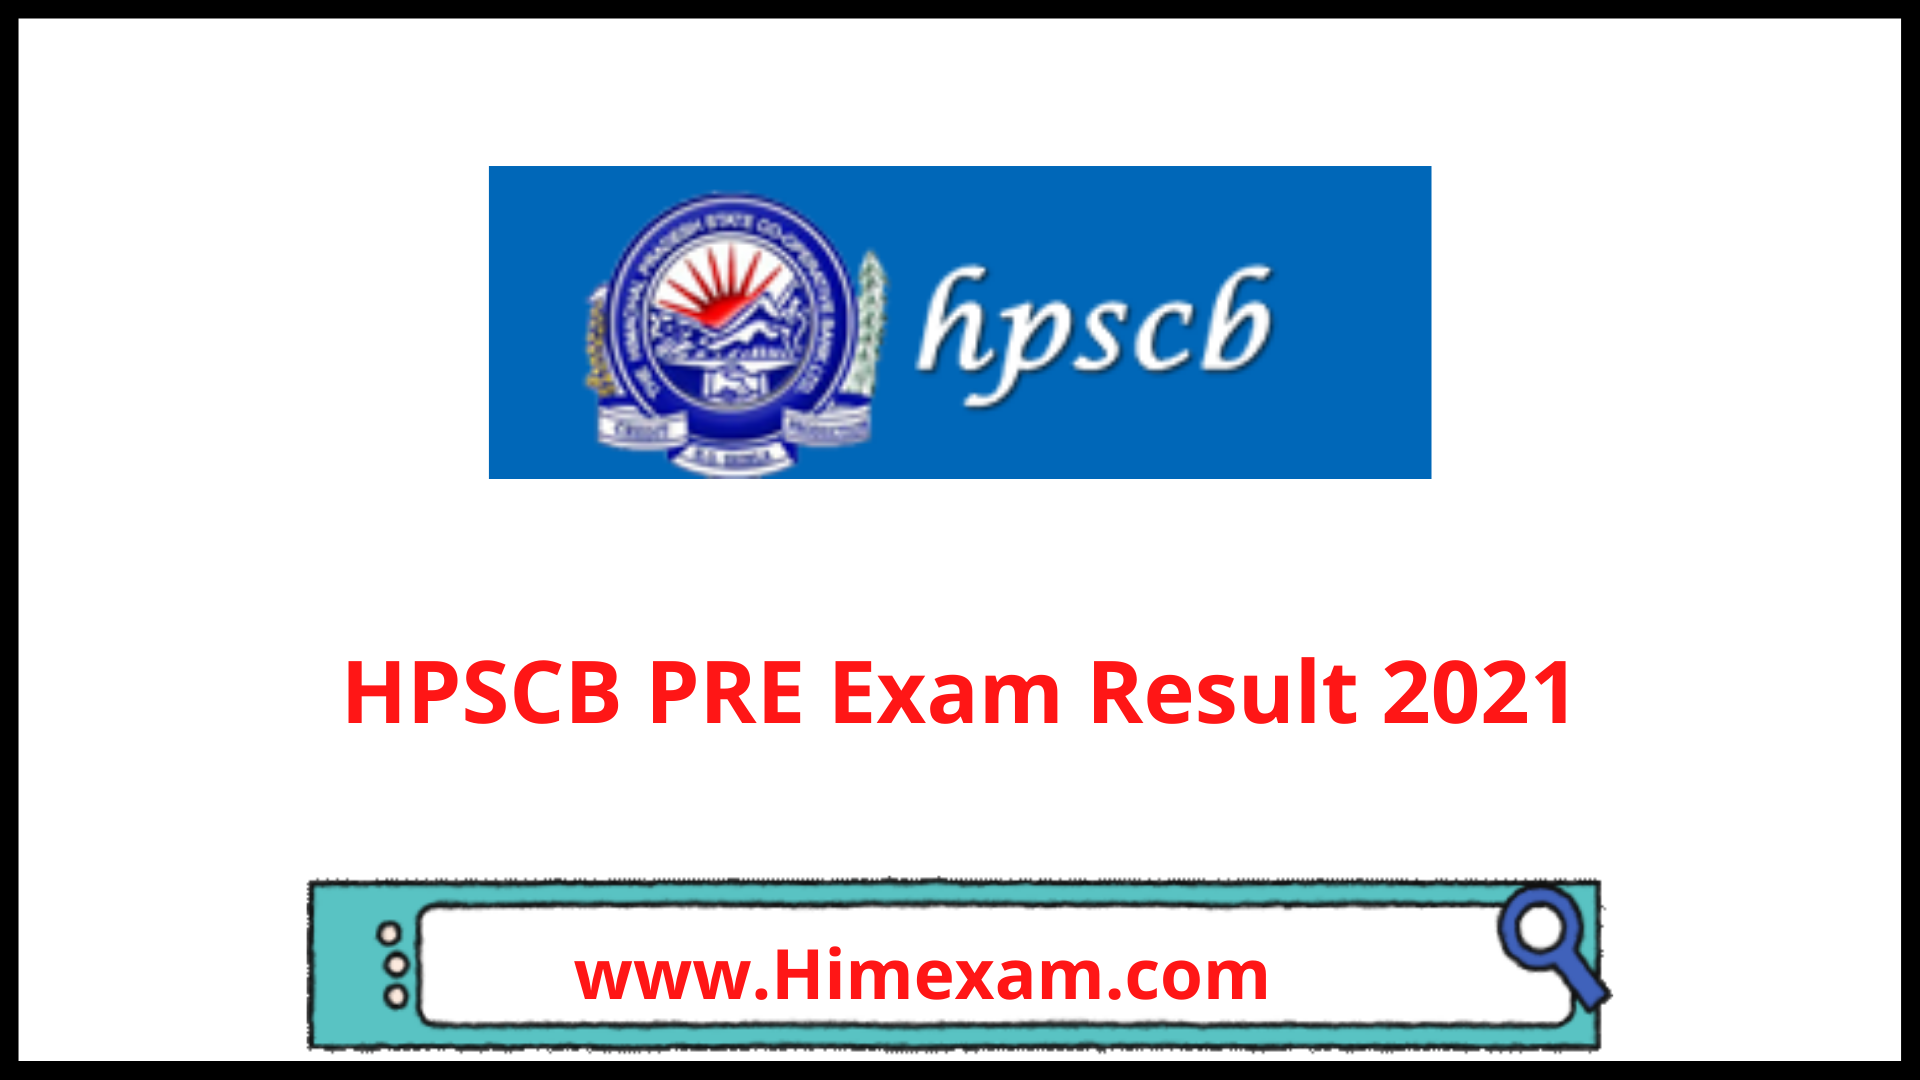 HPSCB PRE Exam Result 2021